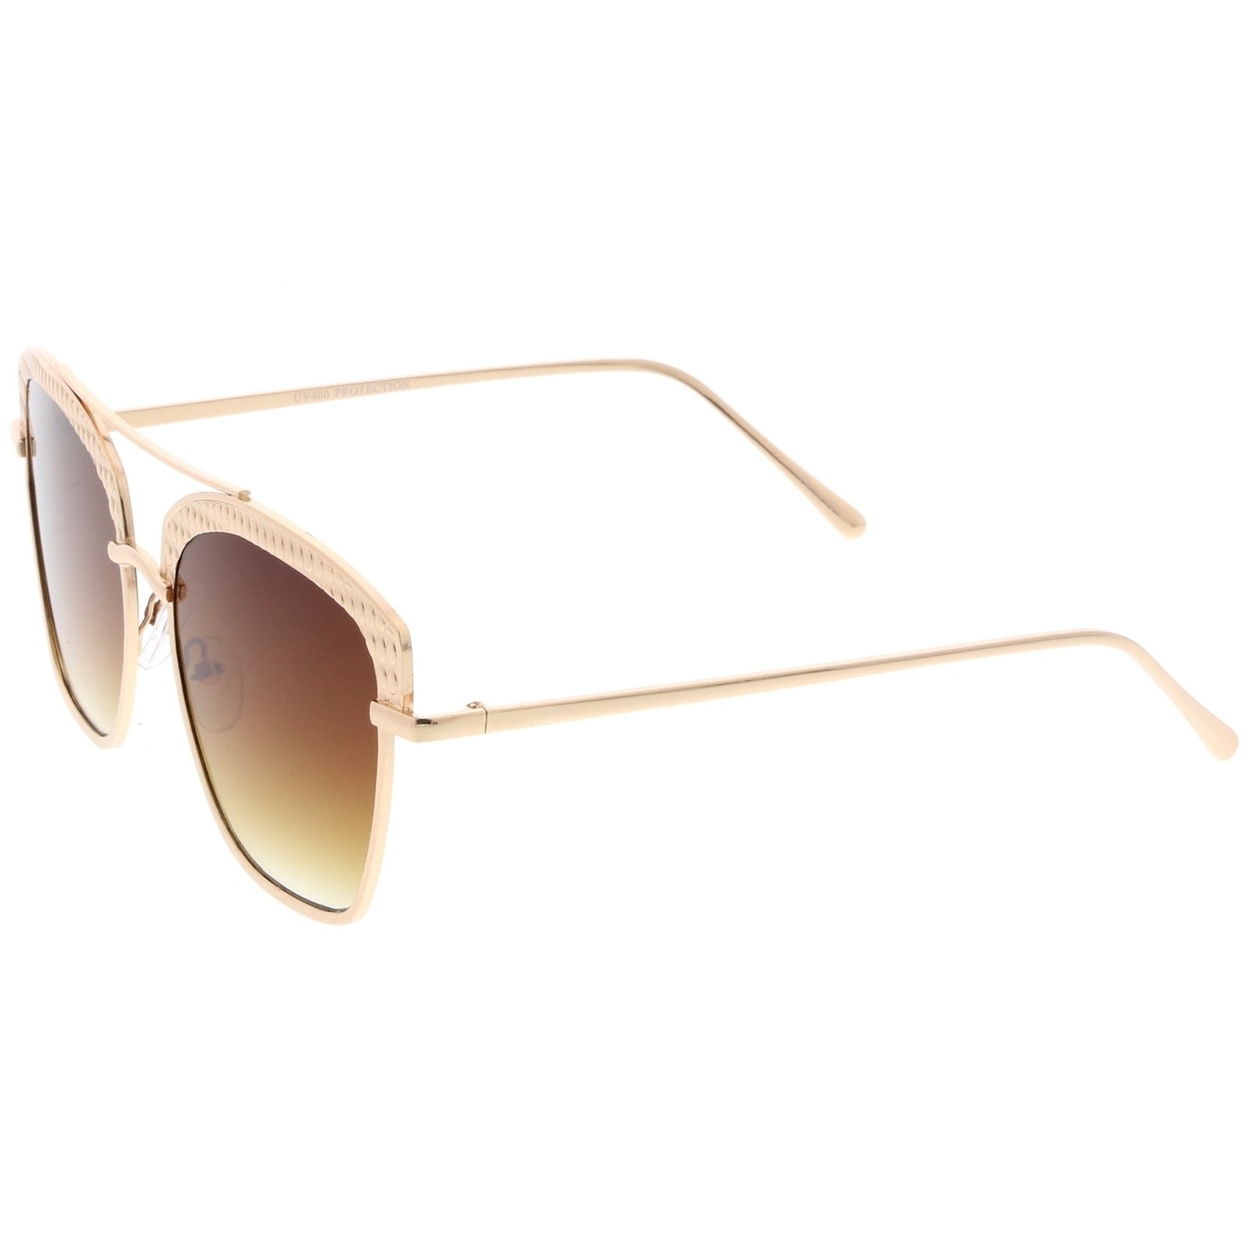 Women's Crossbar Slim Arms Textured Metal Flat Lens Square Sunglasses 58mm - Gold / Smoke